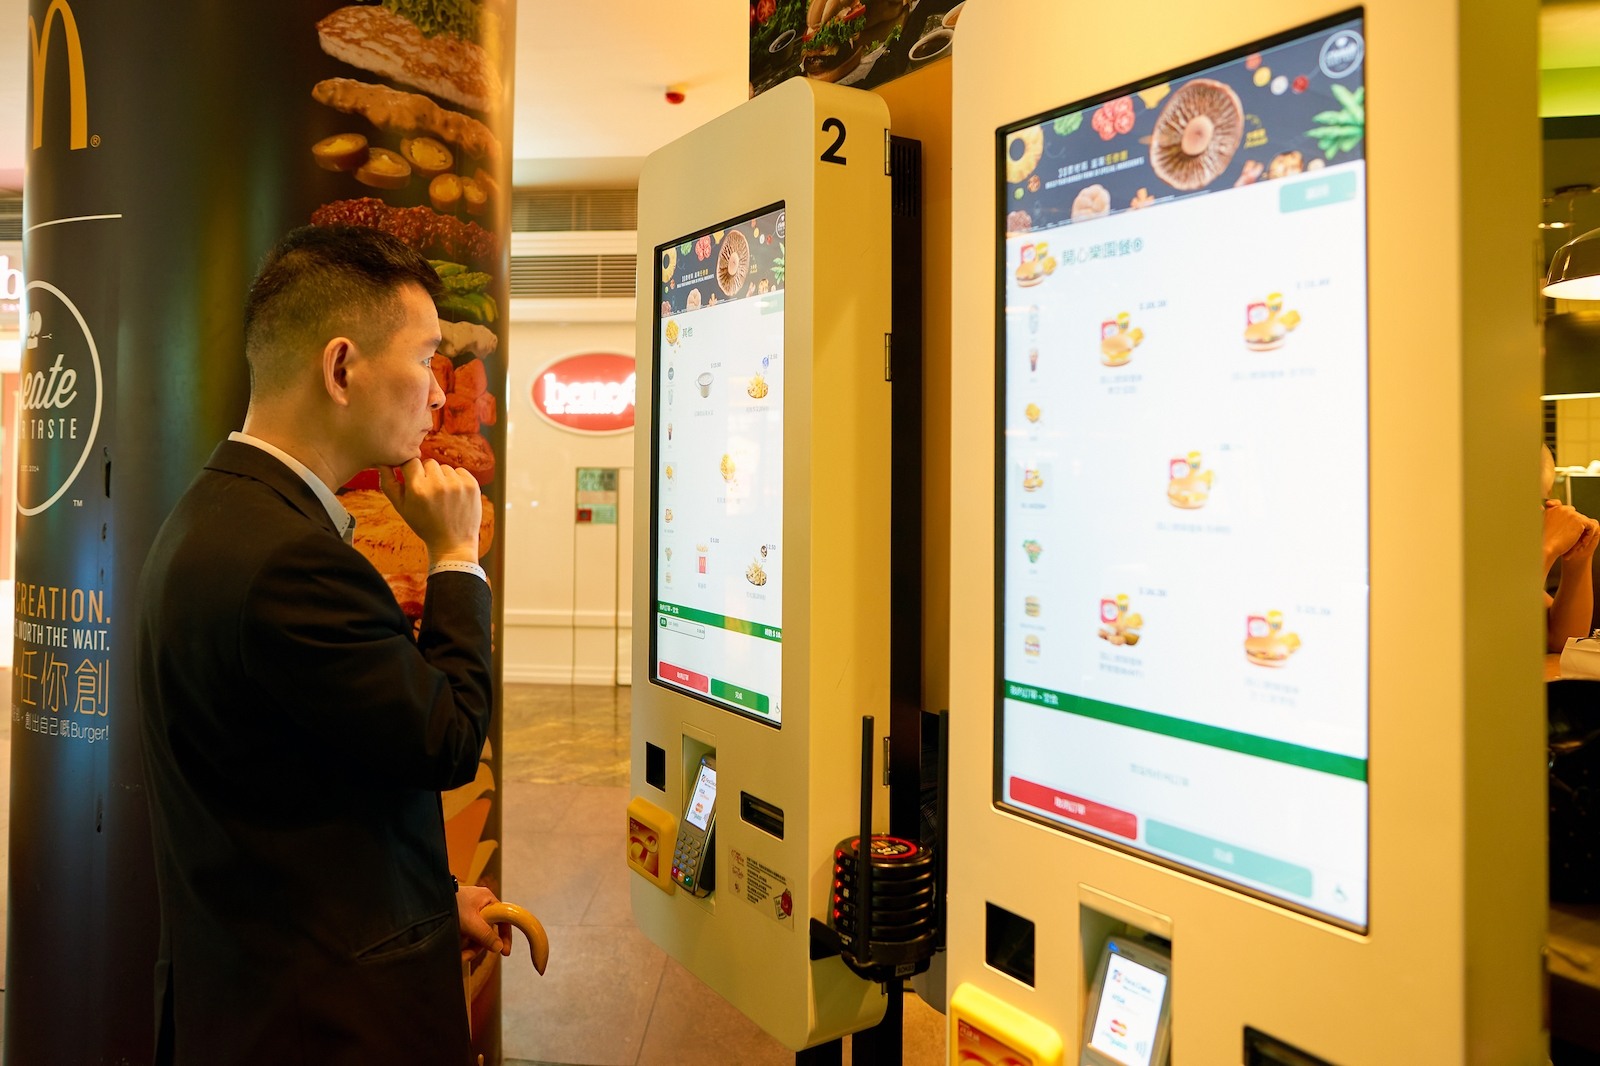 The empathy gap in self-service kiosk experiences